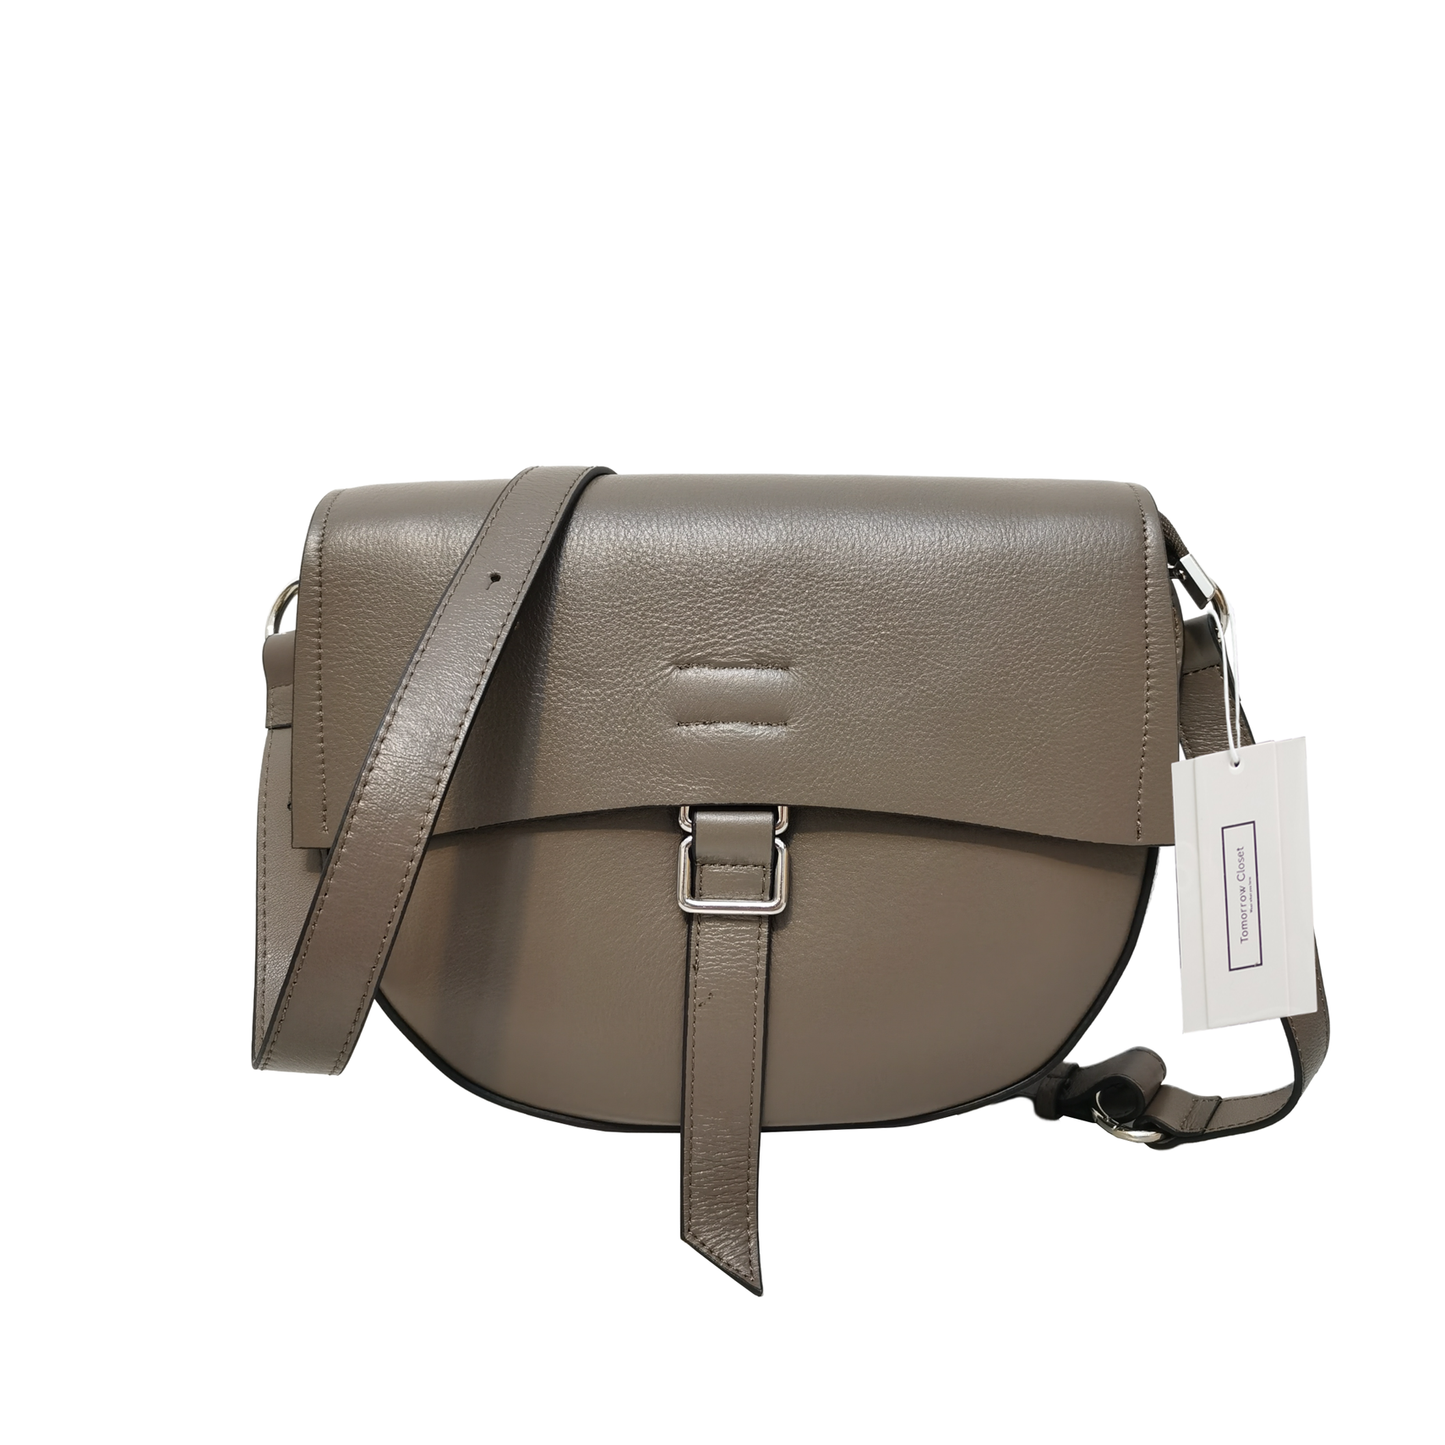 Women's genuine cowhide leather saddle handbag Edgar V4 design